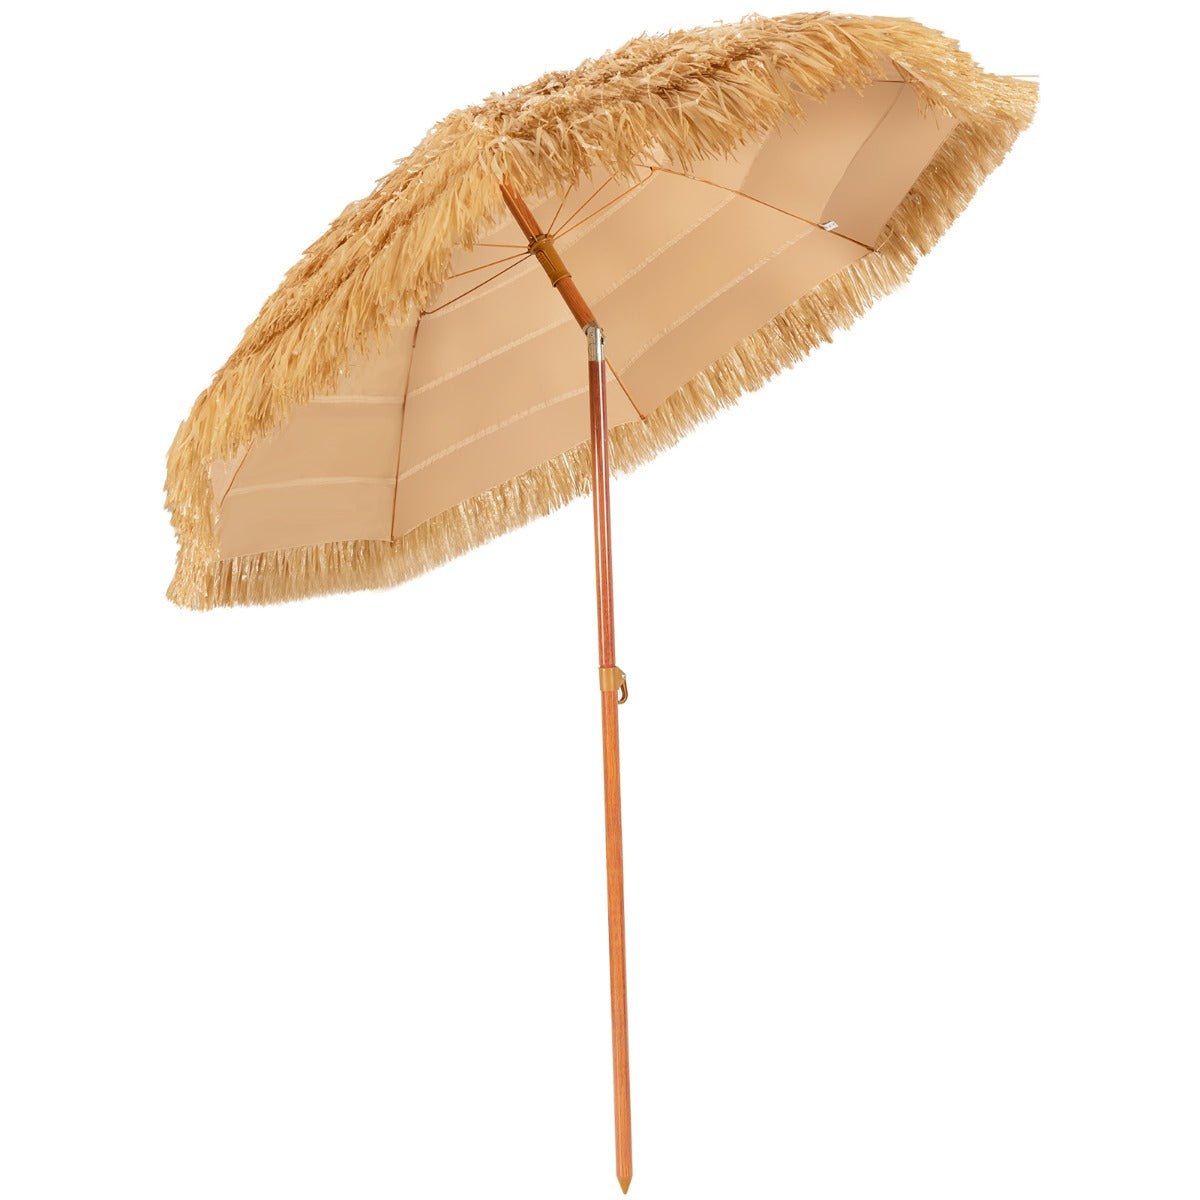 1.8m Portable Thatched Tiki Beach Umbrella with Adjustable Tilt - Furniture Gold